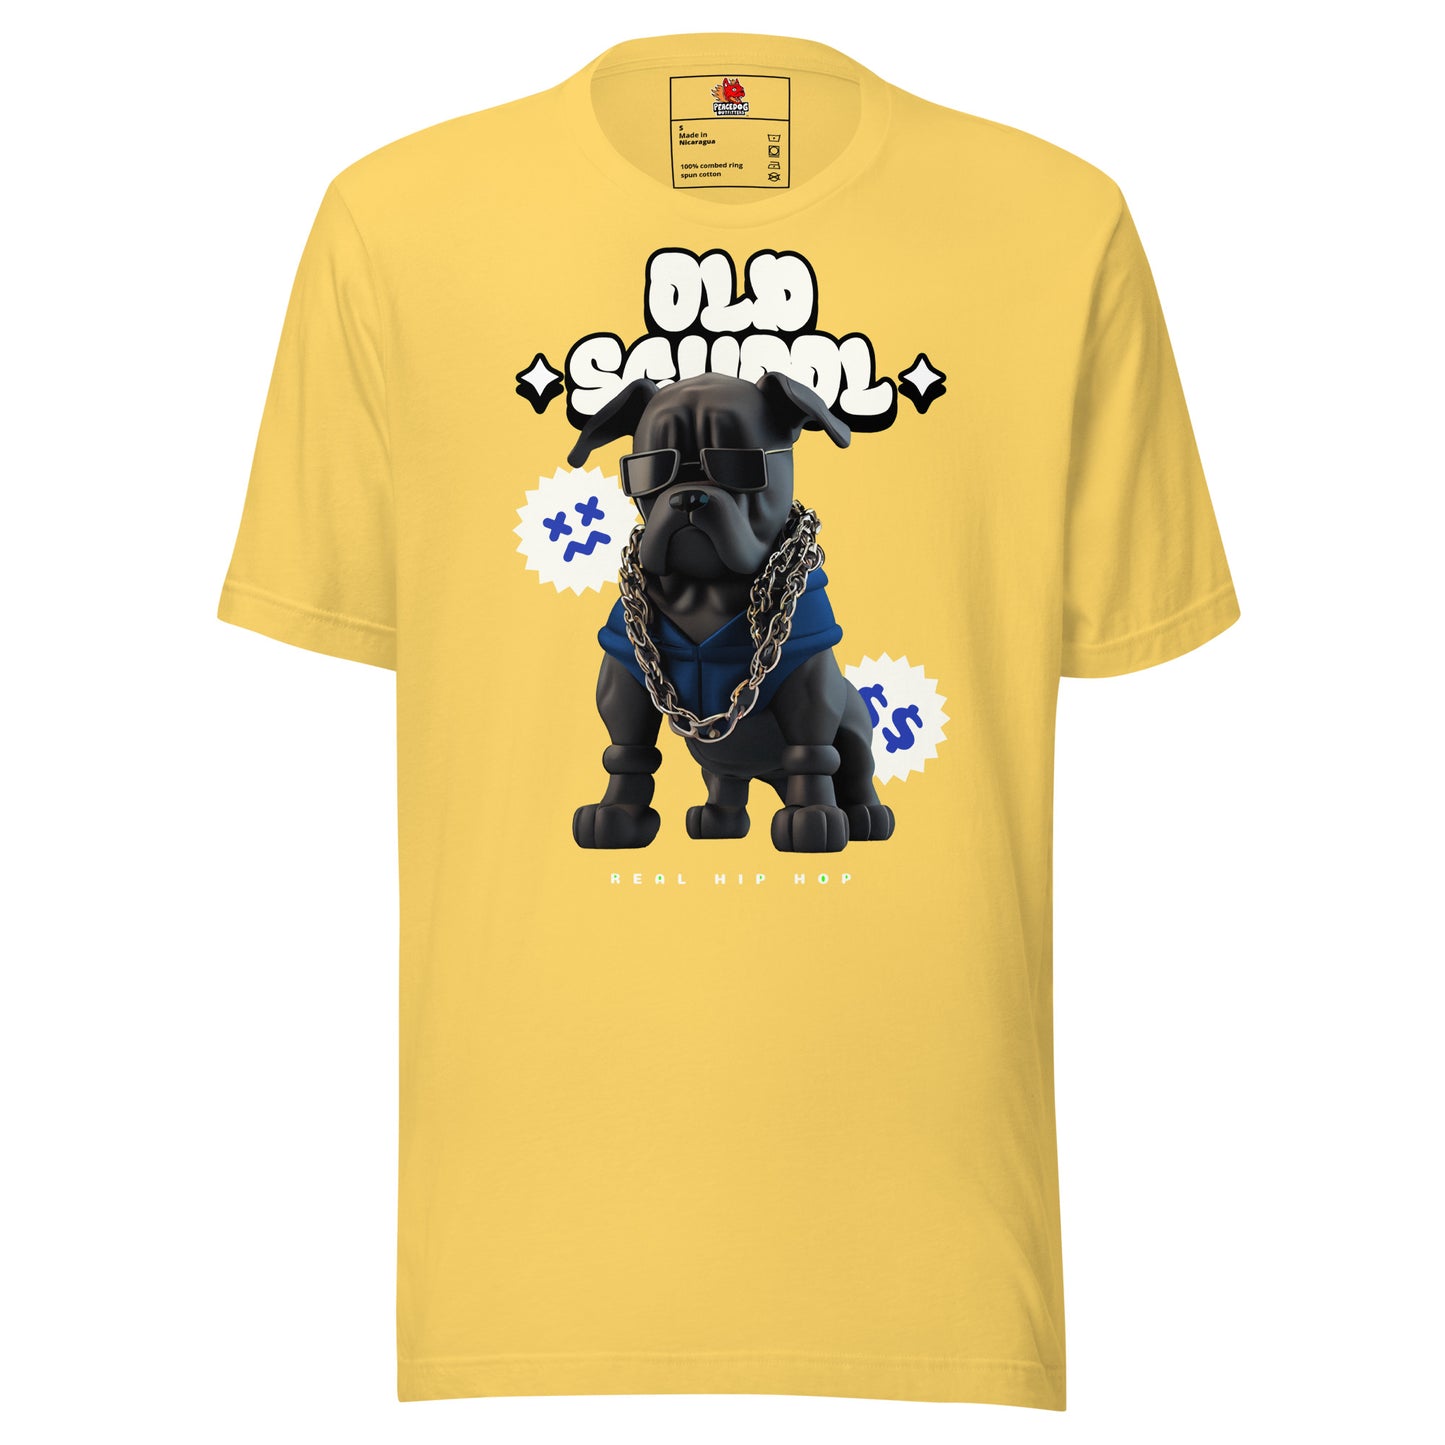 Old School Hip Hop Pup T-shirt